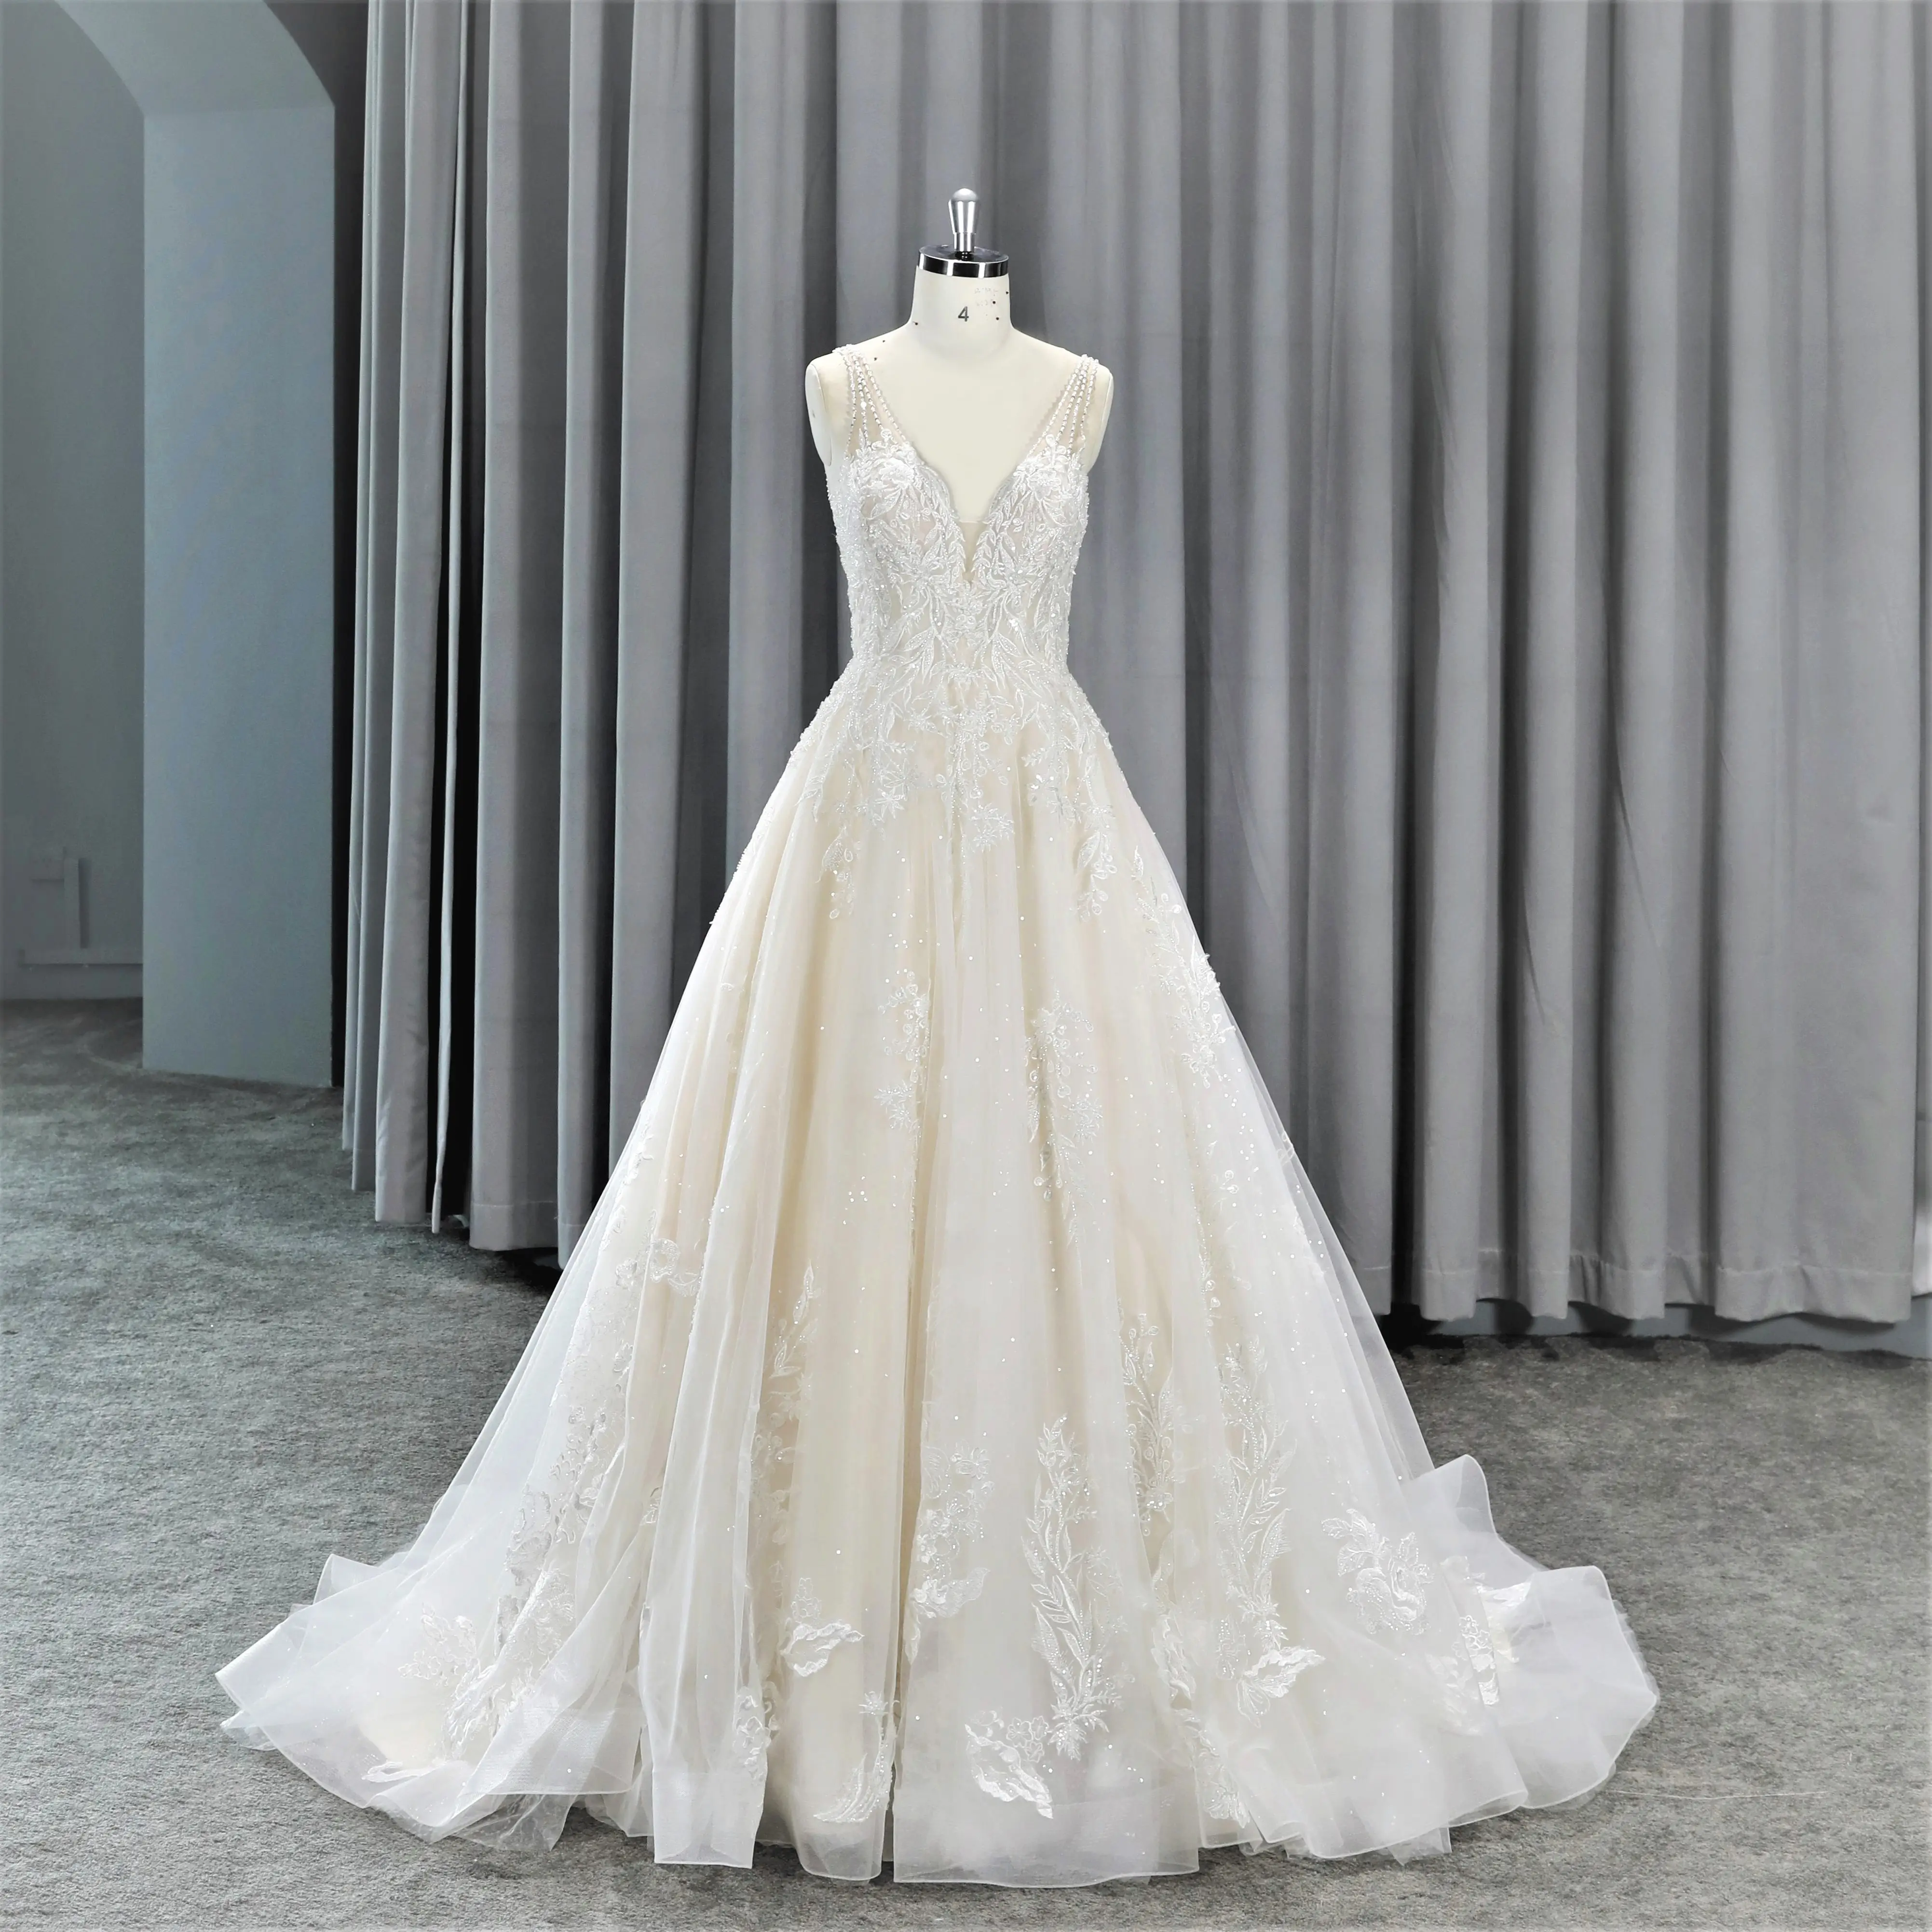 Robes de mariée de luxe à col en V laec perlage vestidos de novia robe de mariée GC23002 balayage train